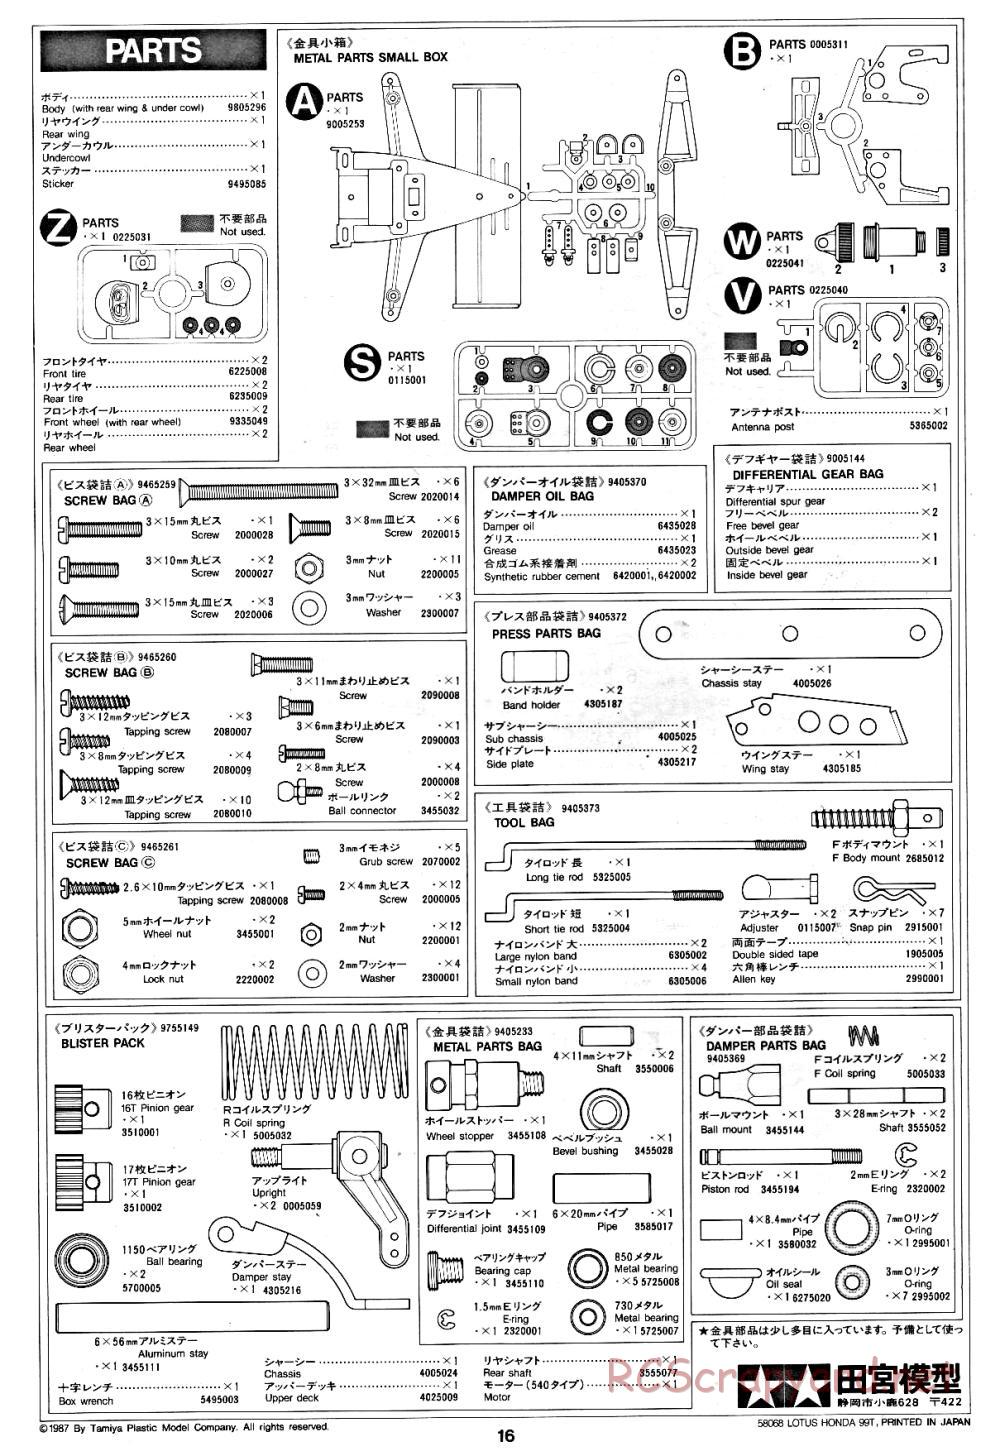 Tamiya - Lotus Honda 99T - 58068 - Manual - Page 16